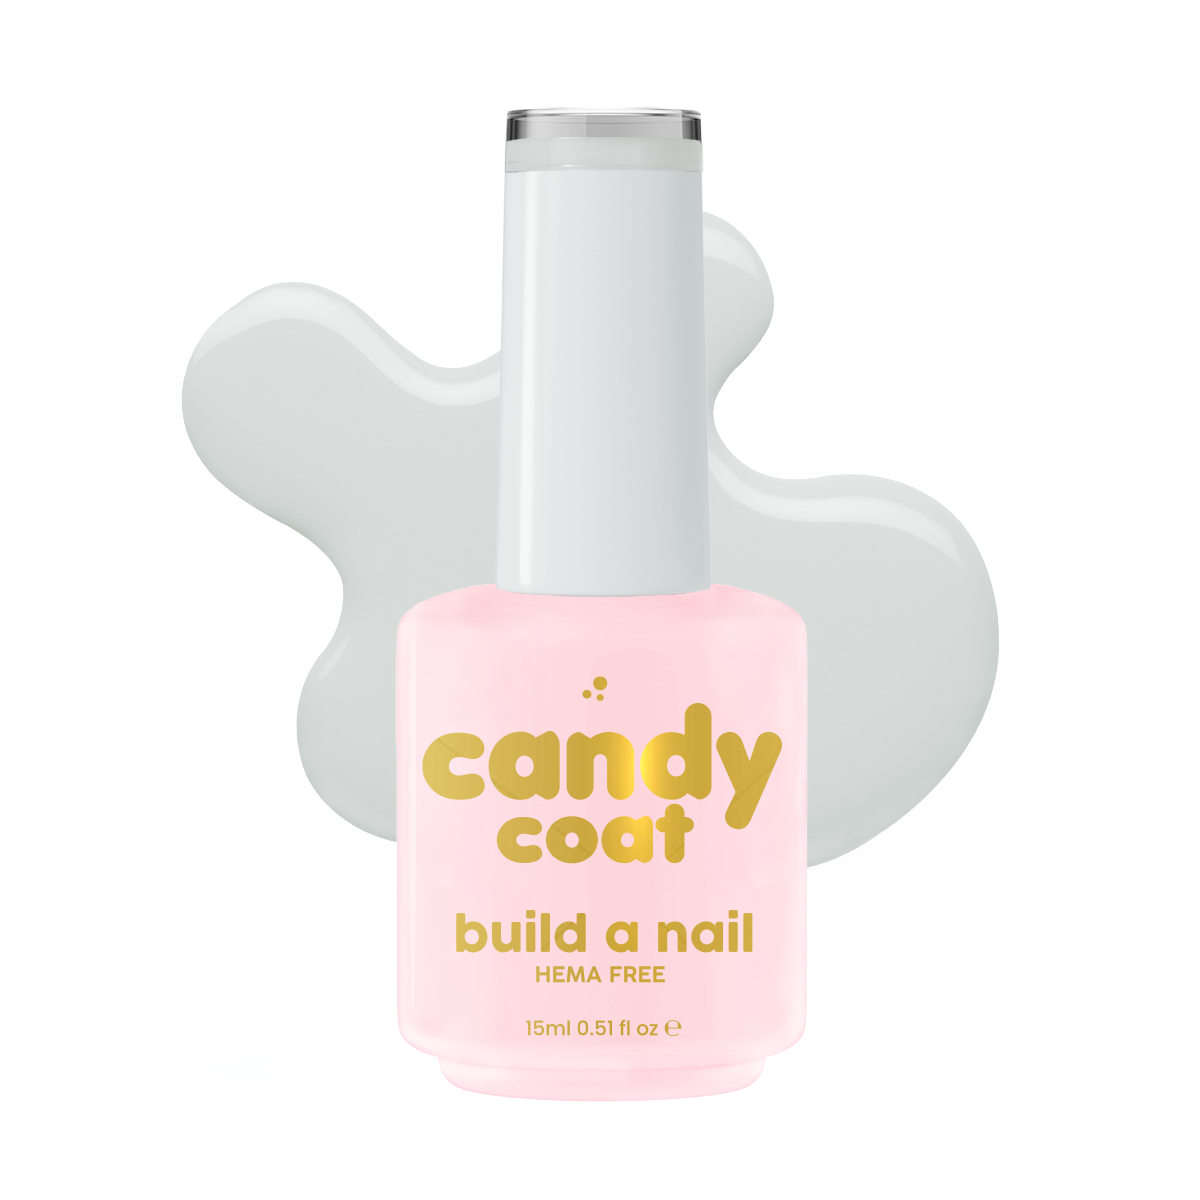 Candy Coat - HEMA Free Build-a-Nail® - BH001 15ml - Candy Coat